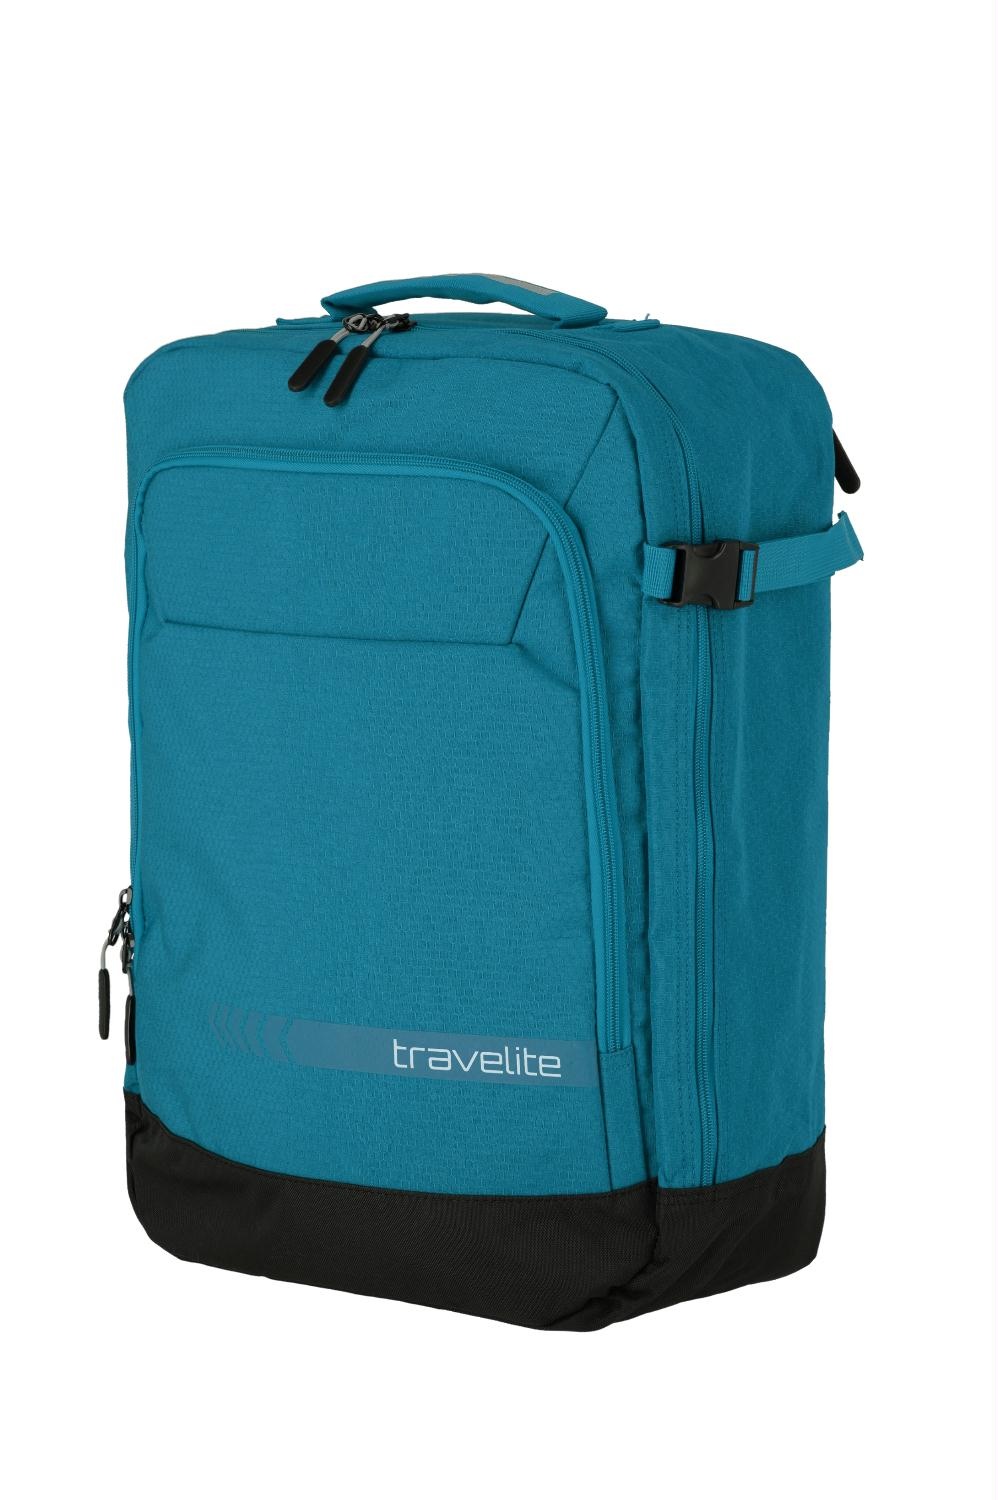 Travelite Reistas / Weekendtas / Handbagage - Kick Off - 37 cm (small) - Blauw